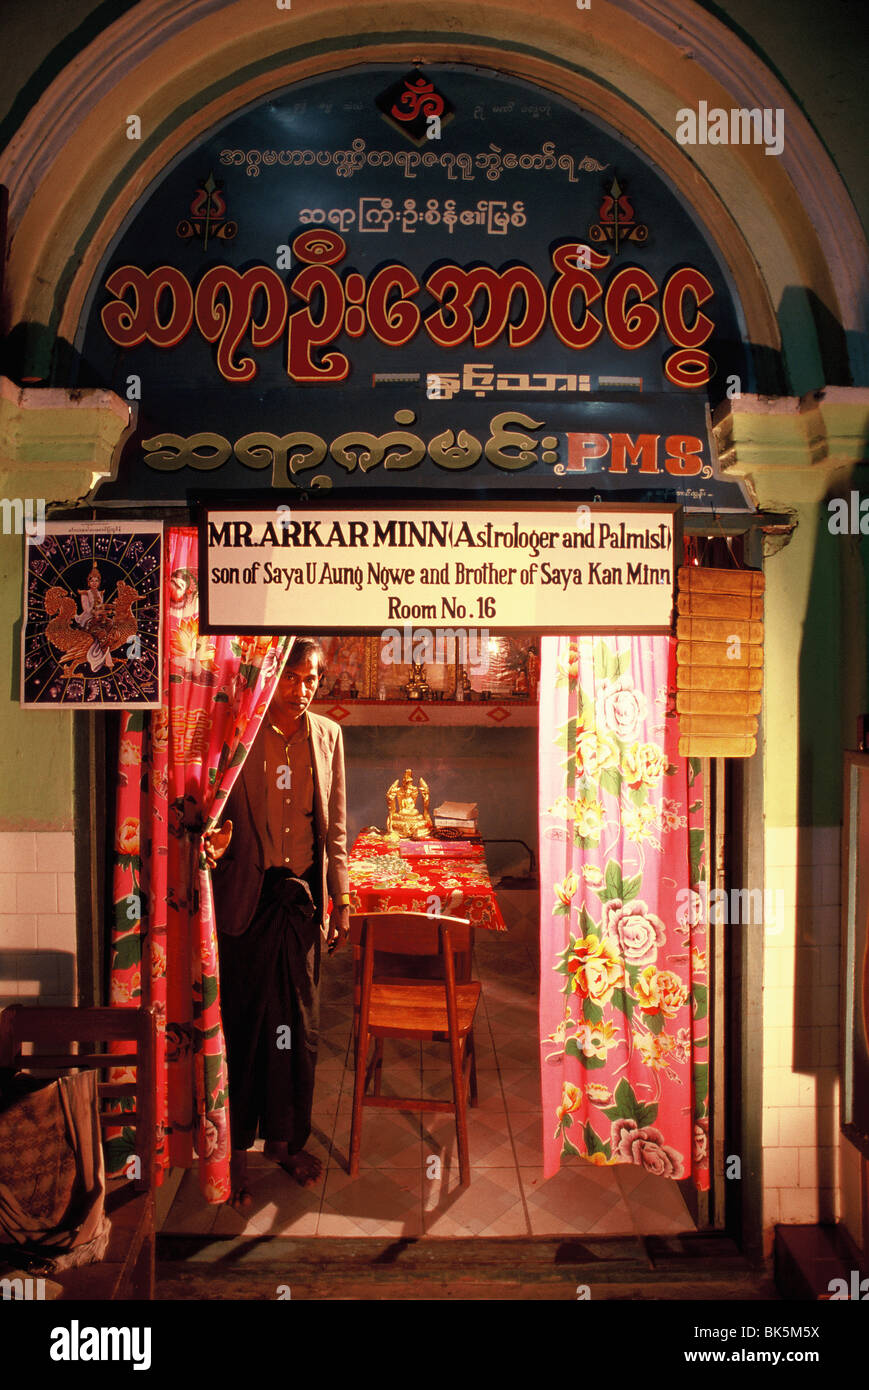 Astrologie-Shop, Myanmar (Burma), Asien Stockfoto